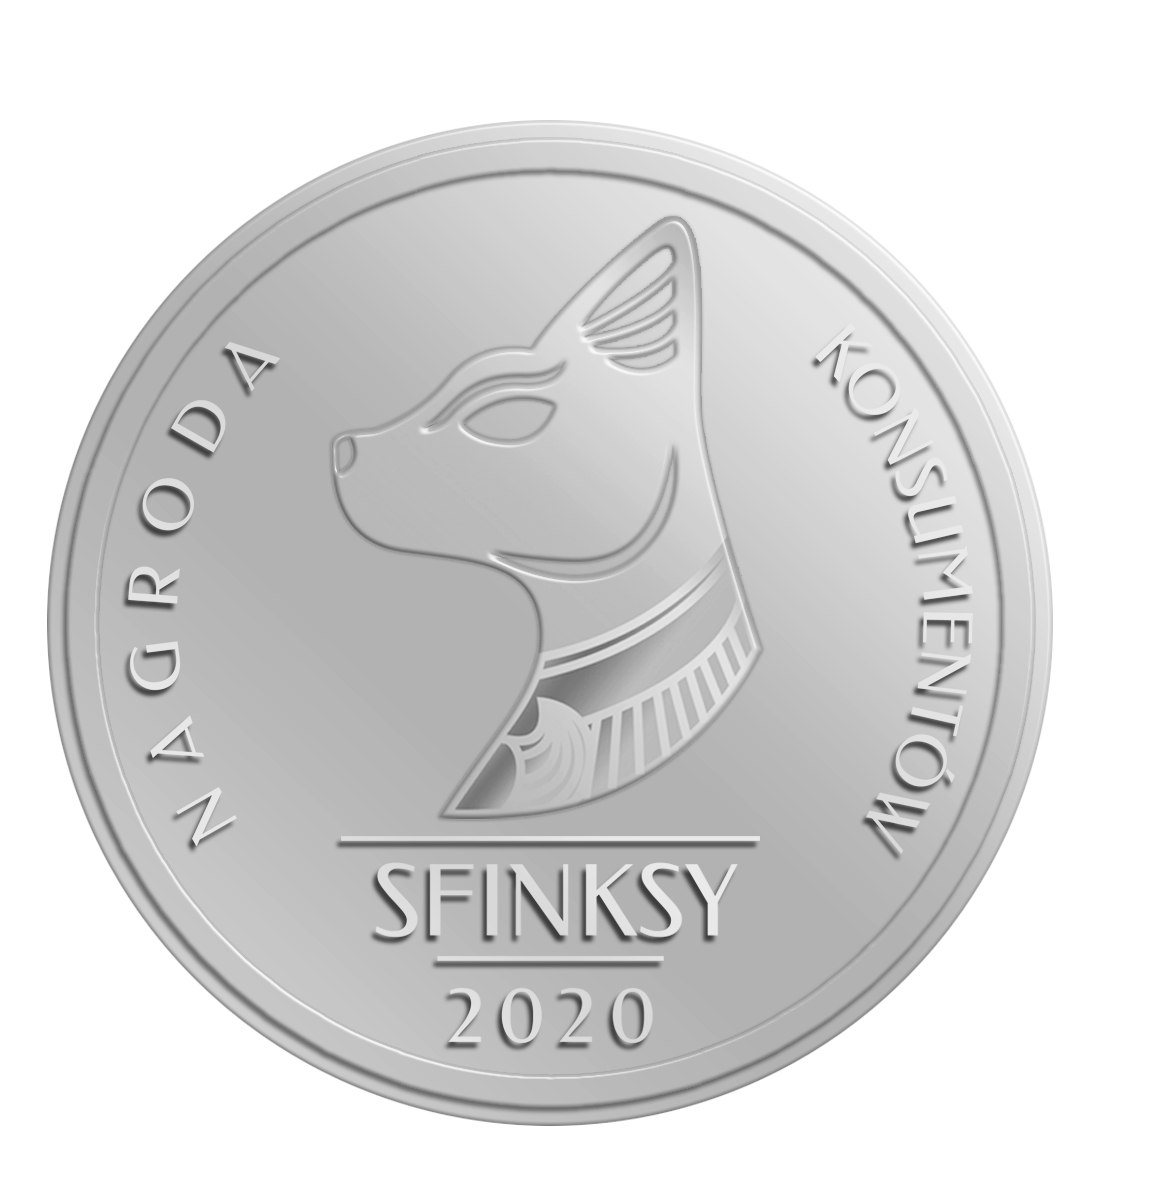 Sfinksy-2020-SREBRO-NAGRODA-KONSUMENTOW.jpg